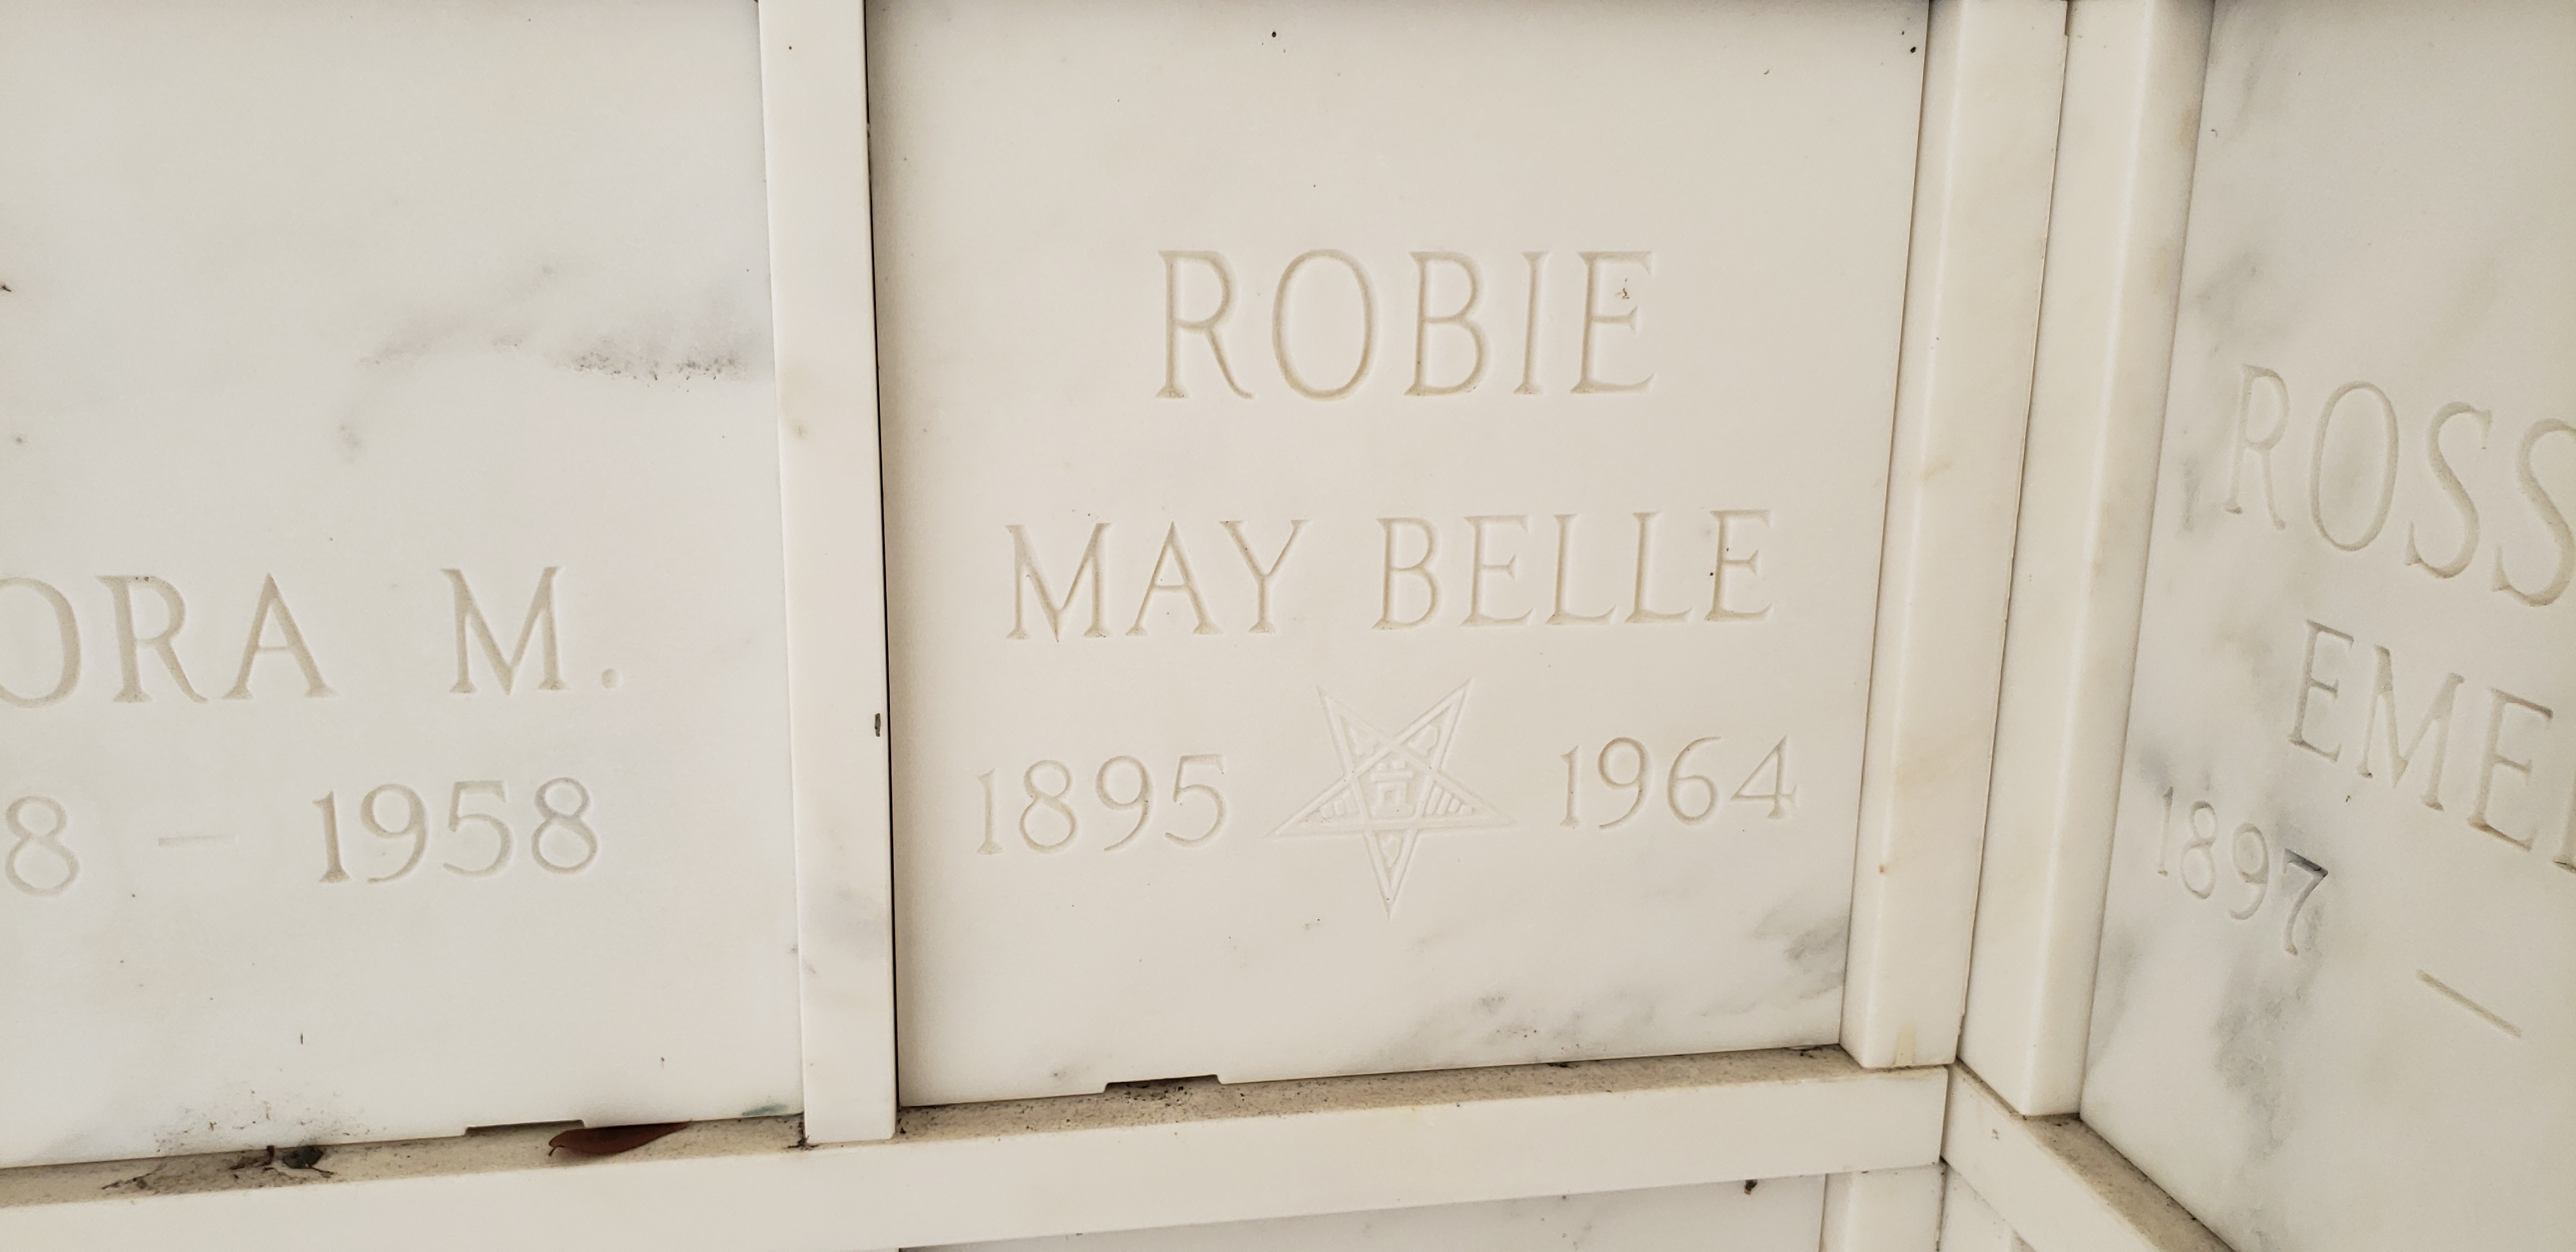 May Belle Robie